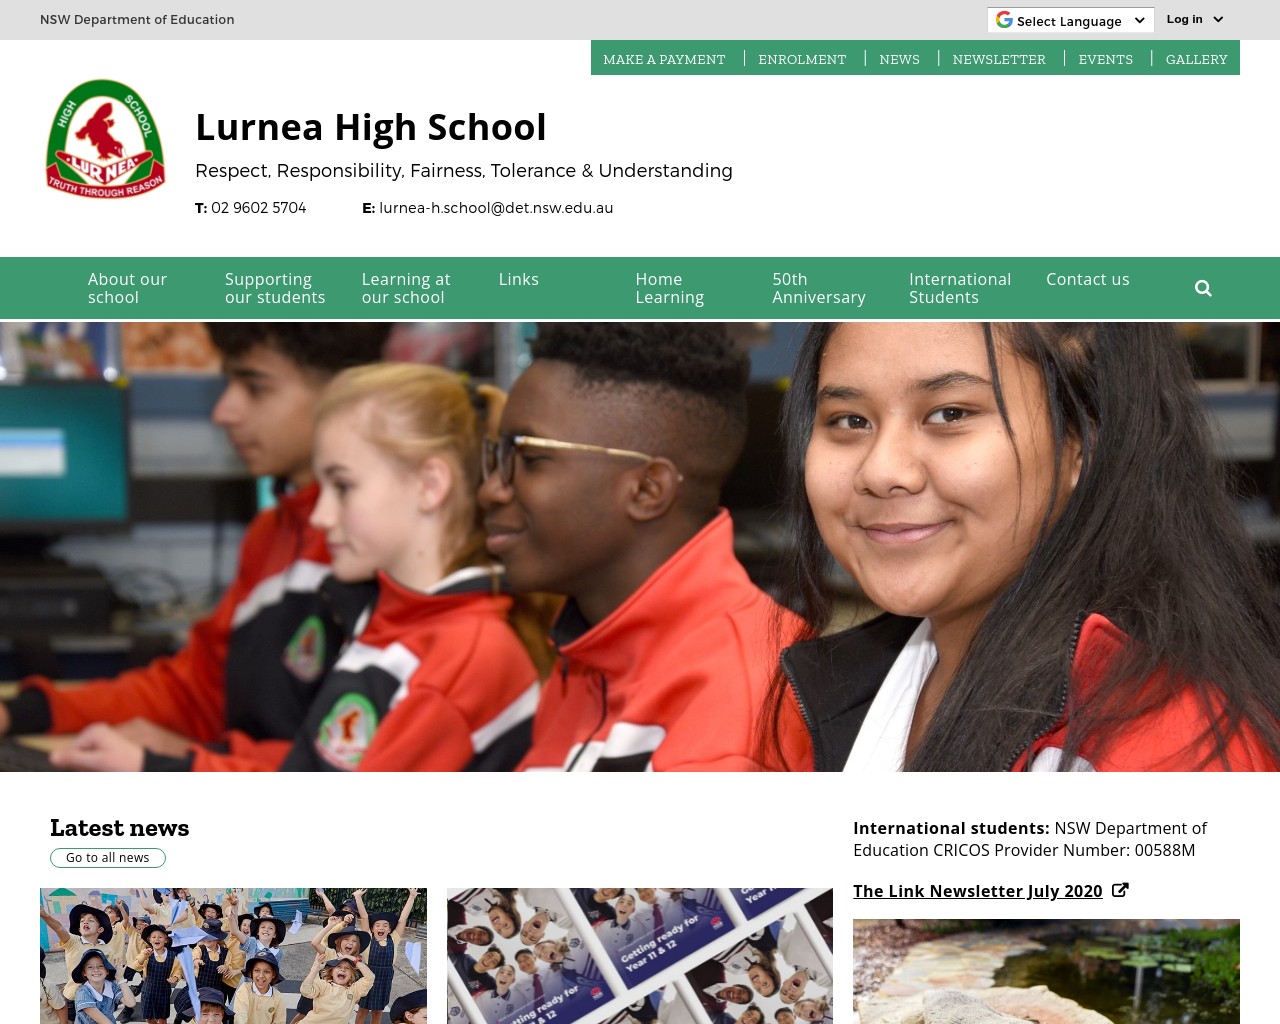 Lurnea High School